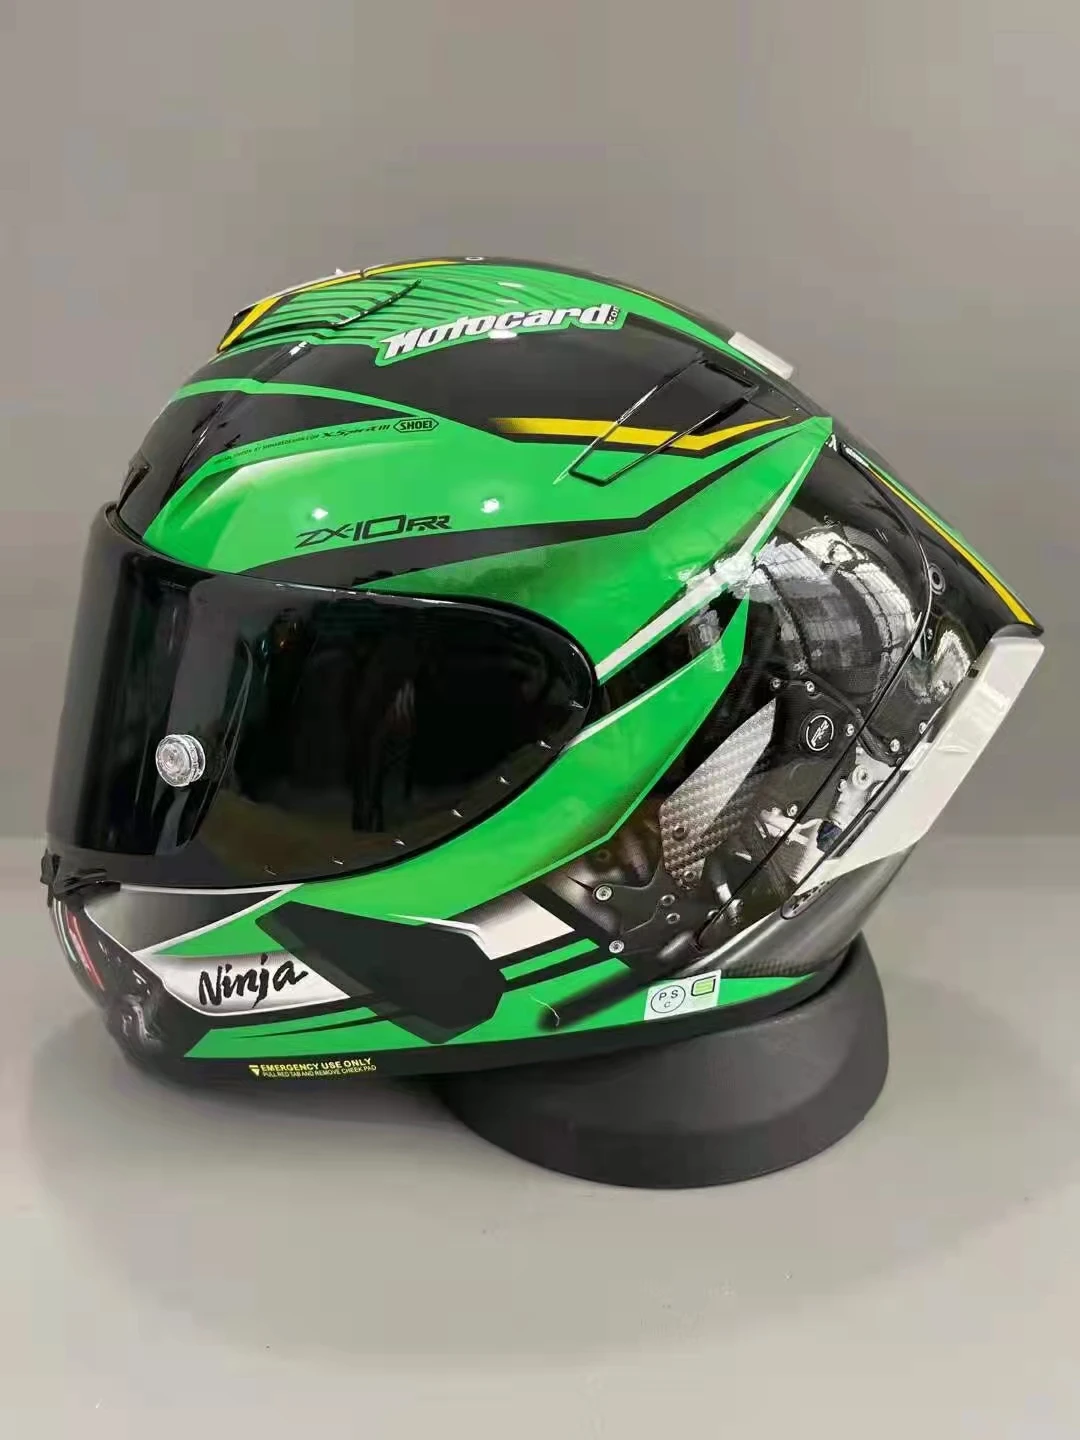 

New Sho X14 Zx-10rr Full Face Motorcycle Helmet Green Helmet Riding Motocross Racing Motobike Helmet H